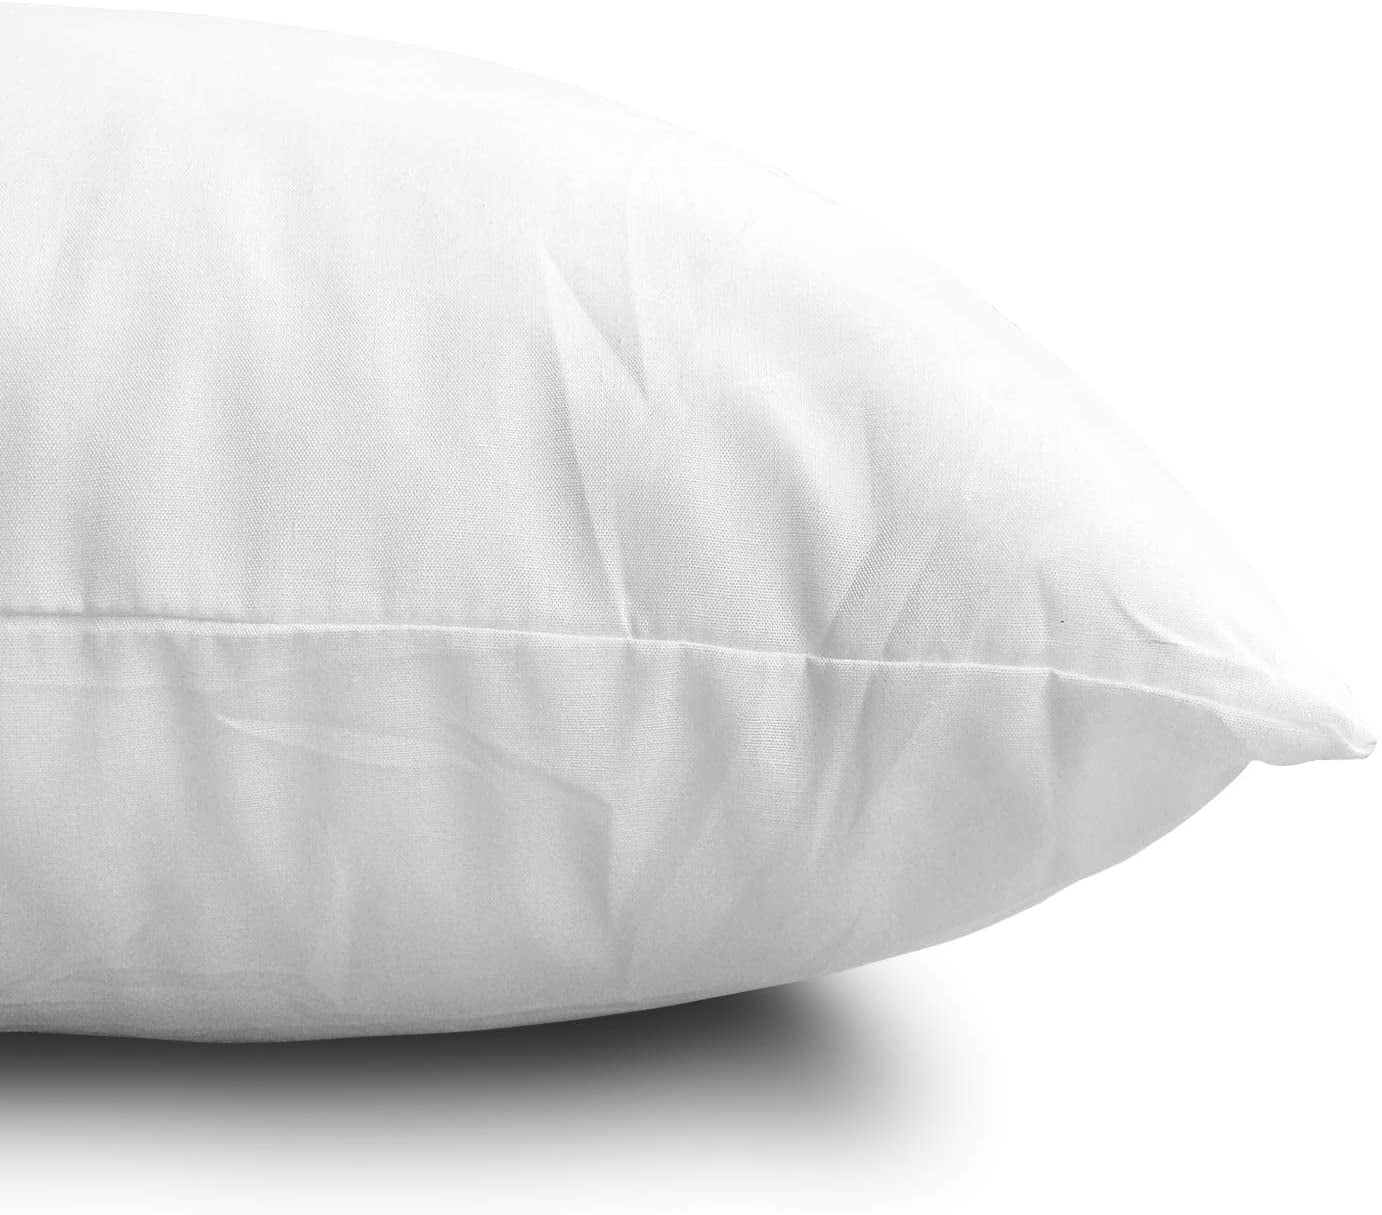  EDOW Throw Pillow Inserts, Set of 4 Lightweight Down